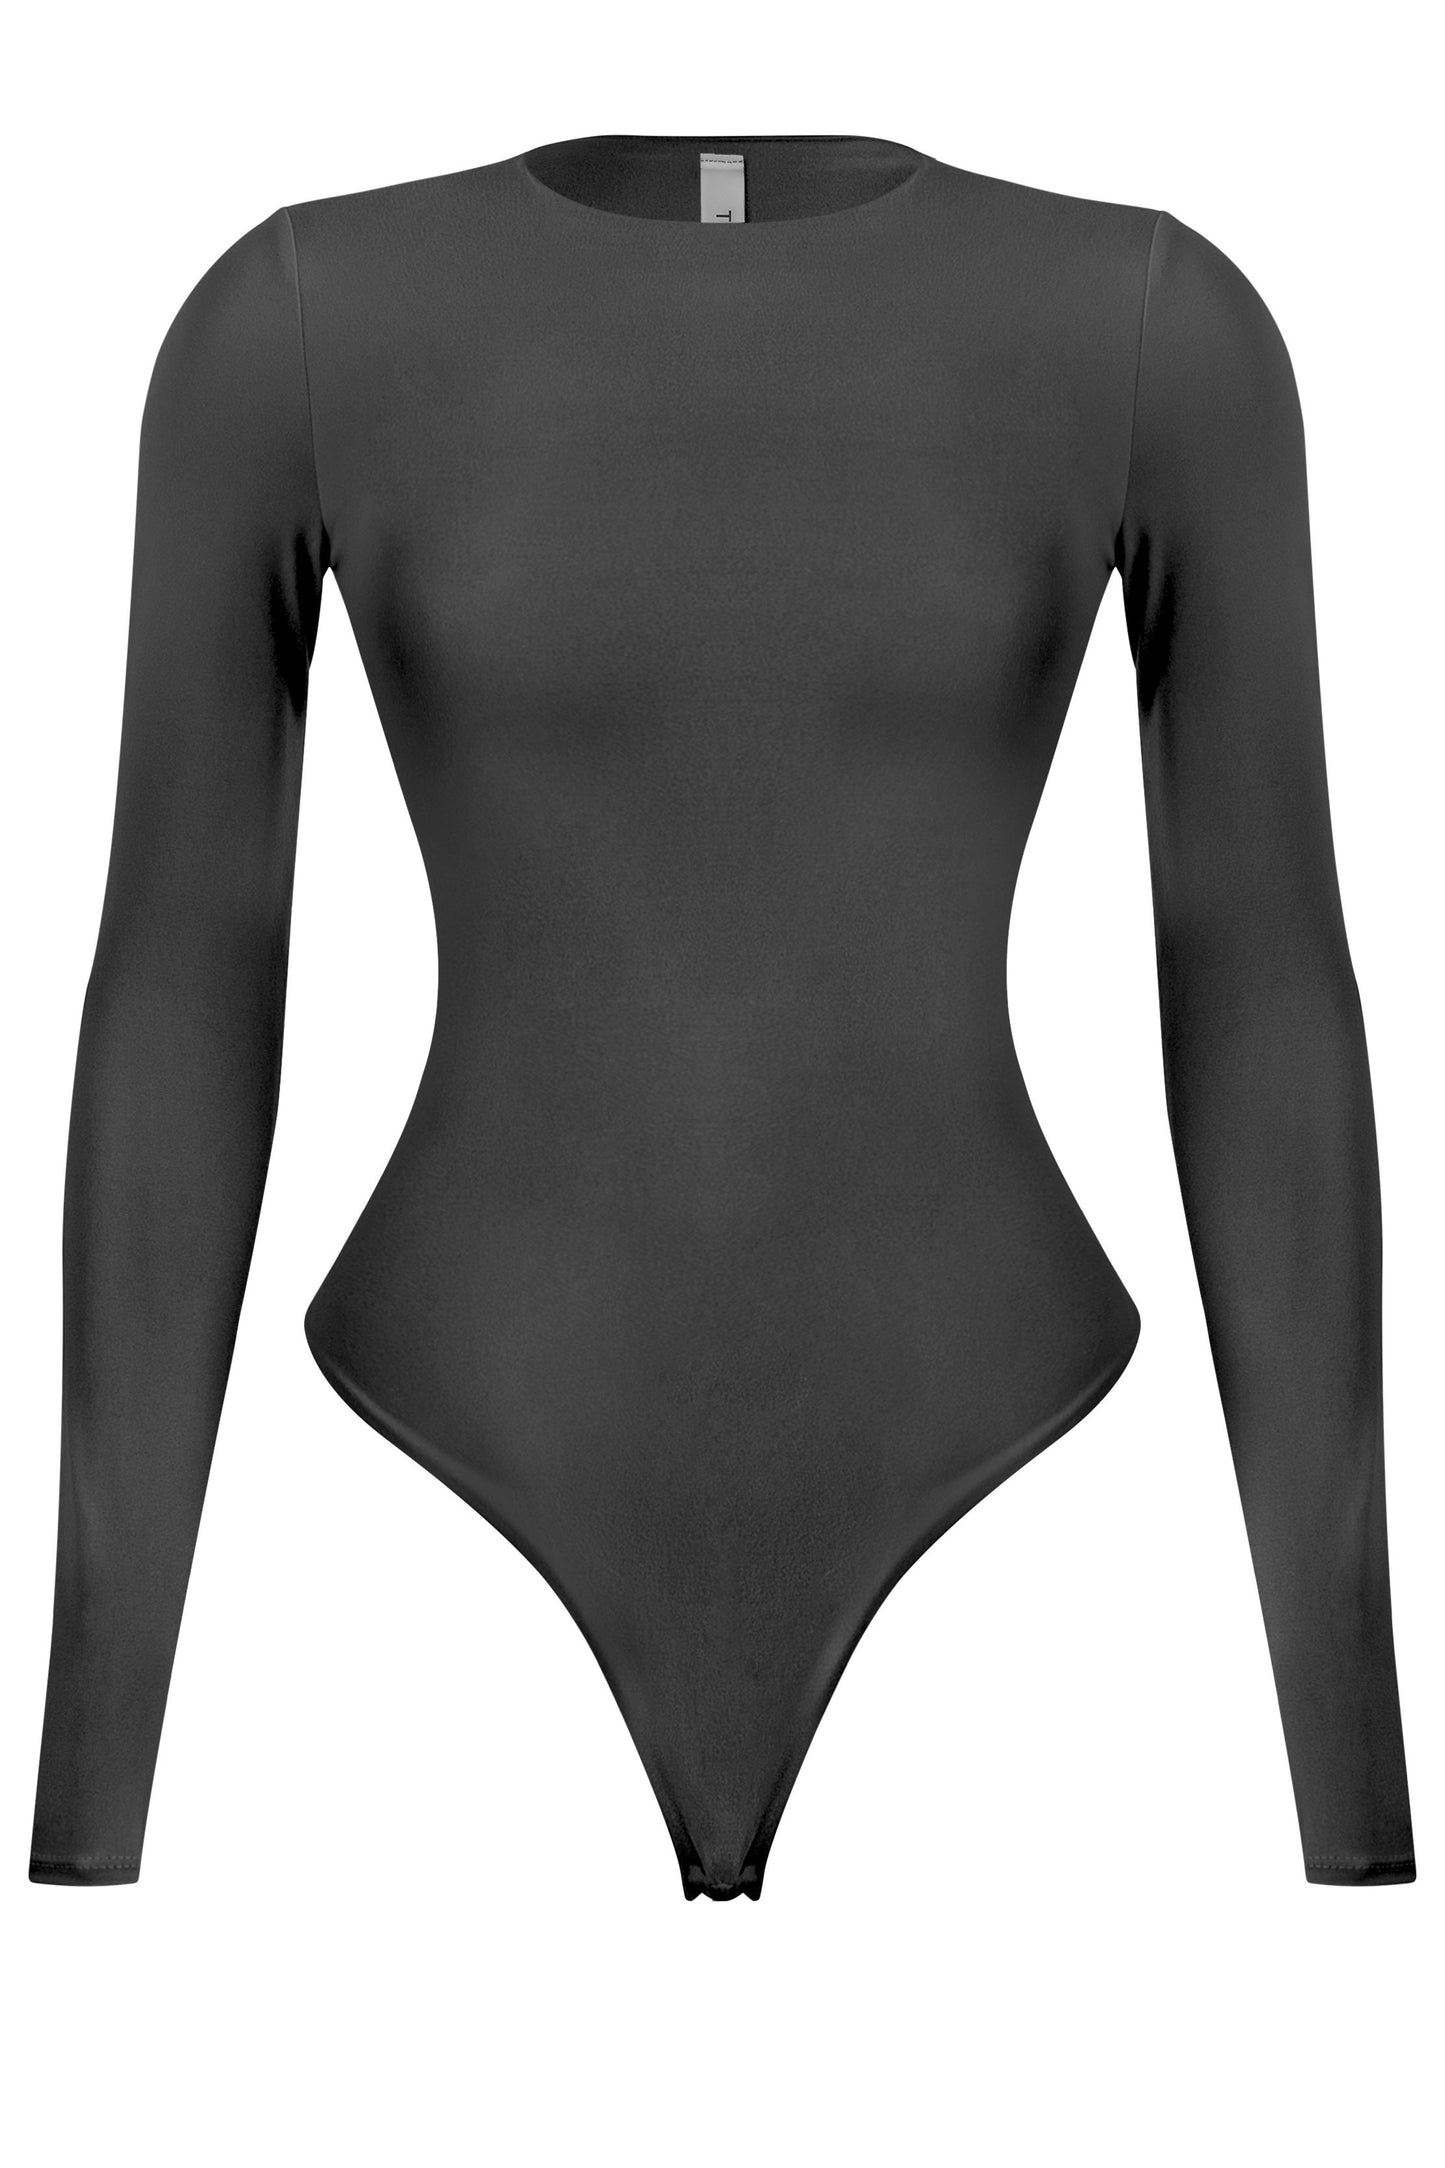 Skins double layered bodysuit - black